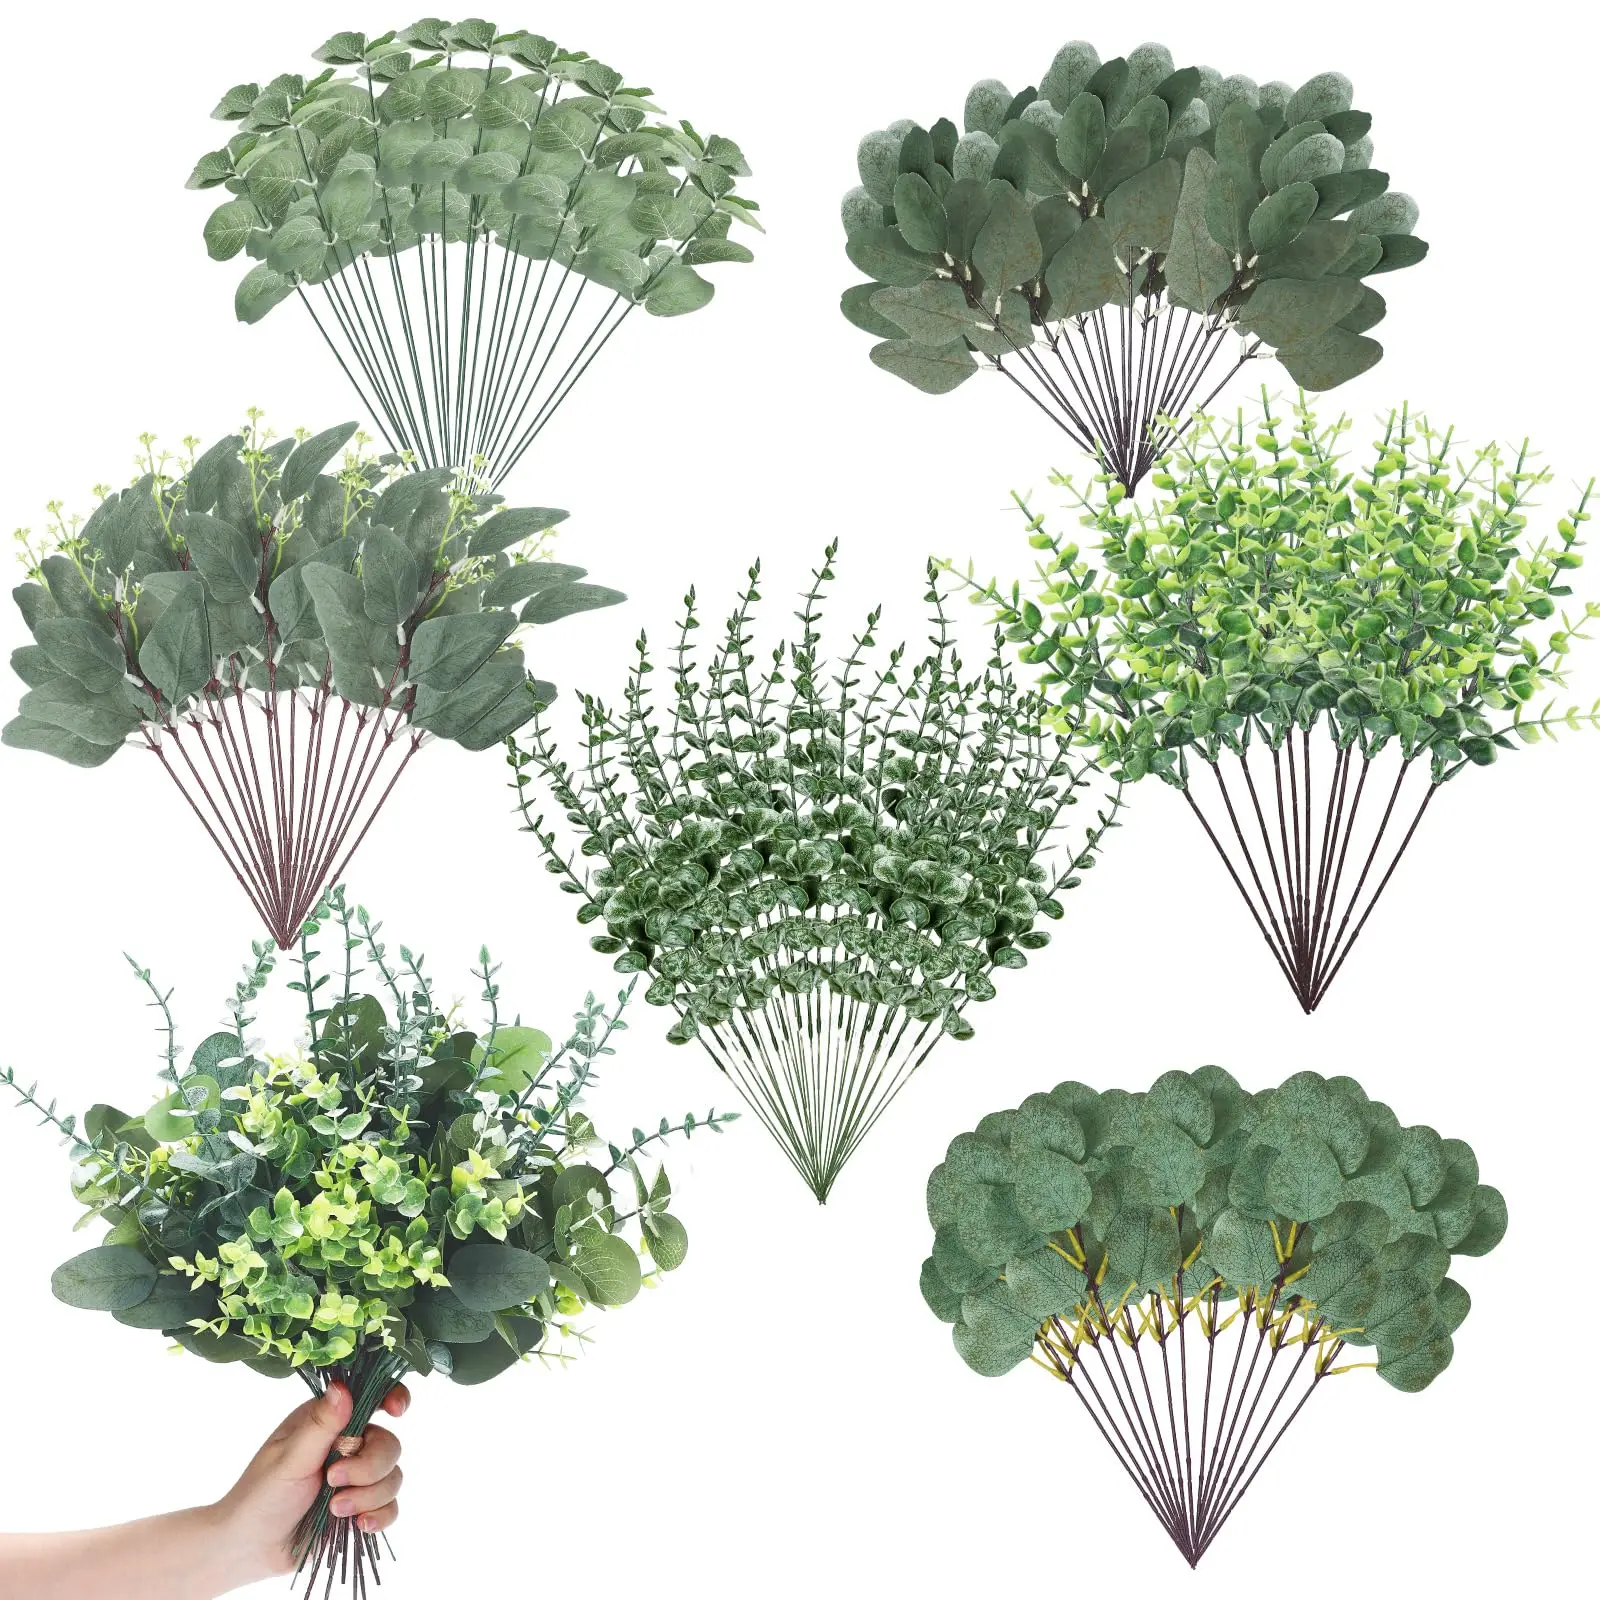 

120 Pcs 6 Kinds Mixed Eucalyptus Leaves Stems Bulk Artificial Eucalyptus Greenery Picks Bundle for Wedding Vase Floral Decor